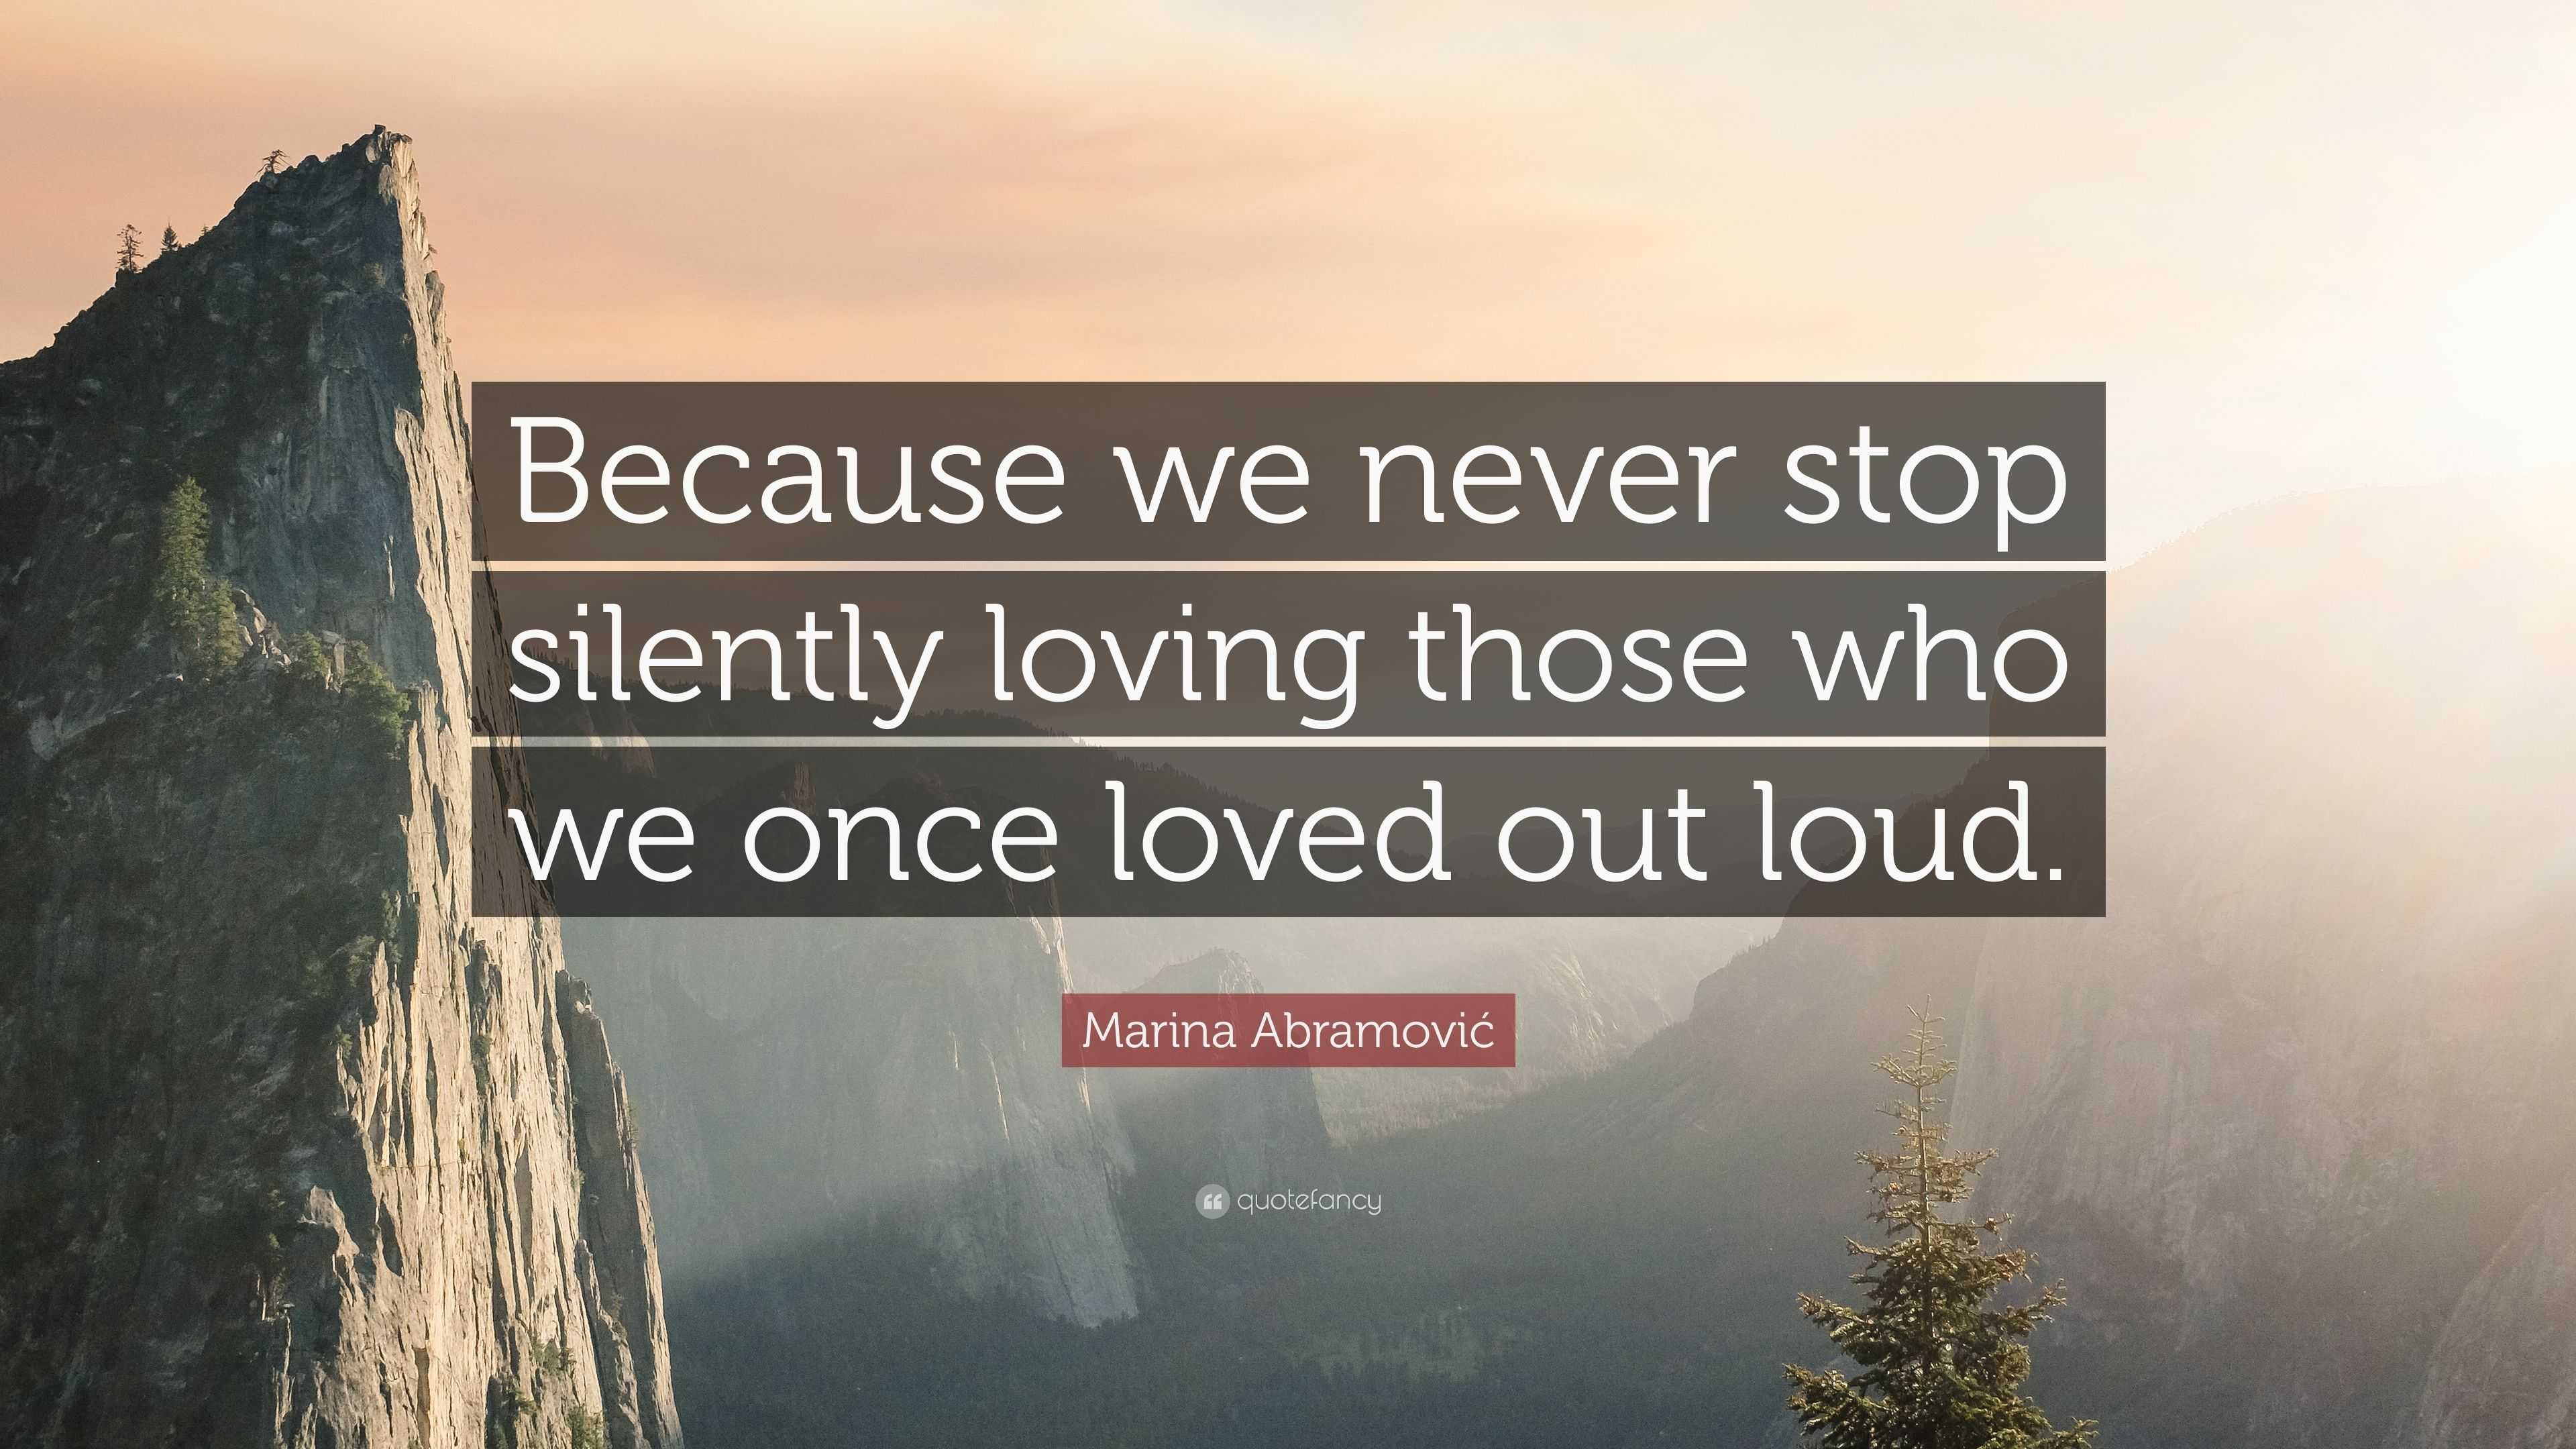 Marina Abramović Quote: “Because we never stop silently loving